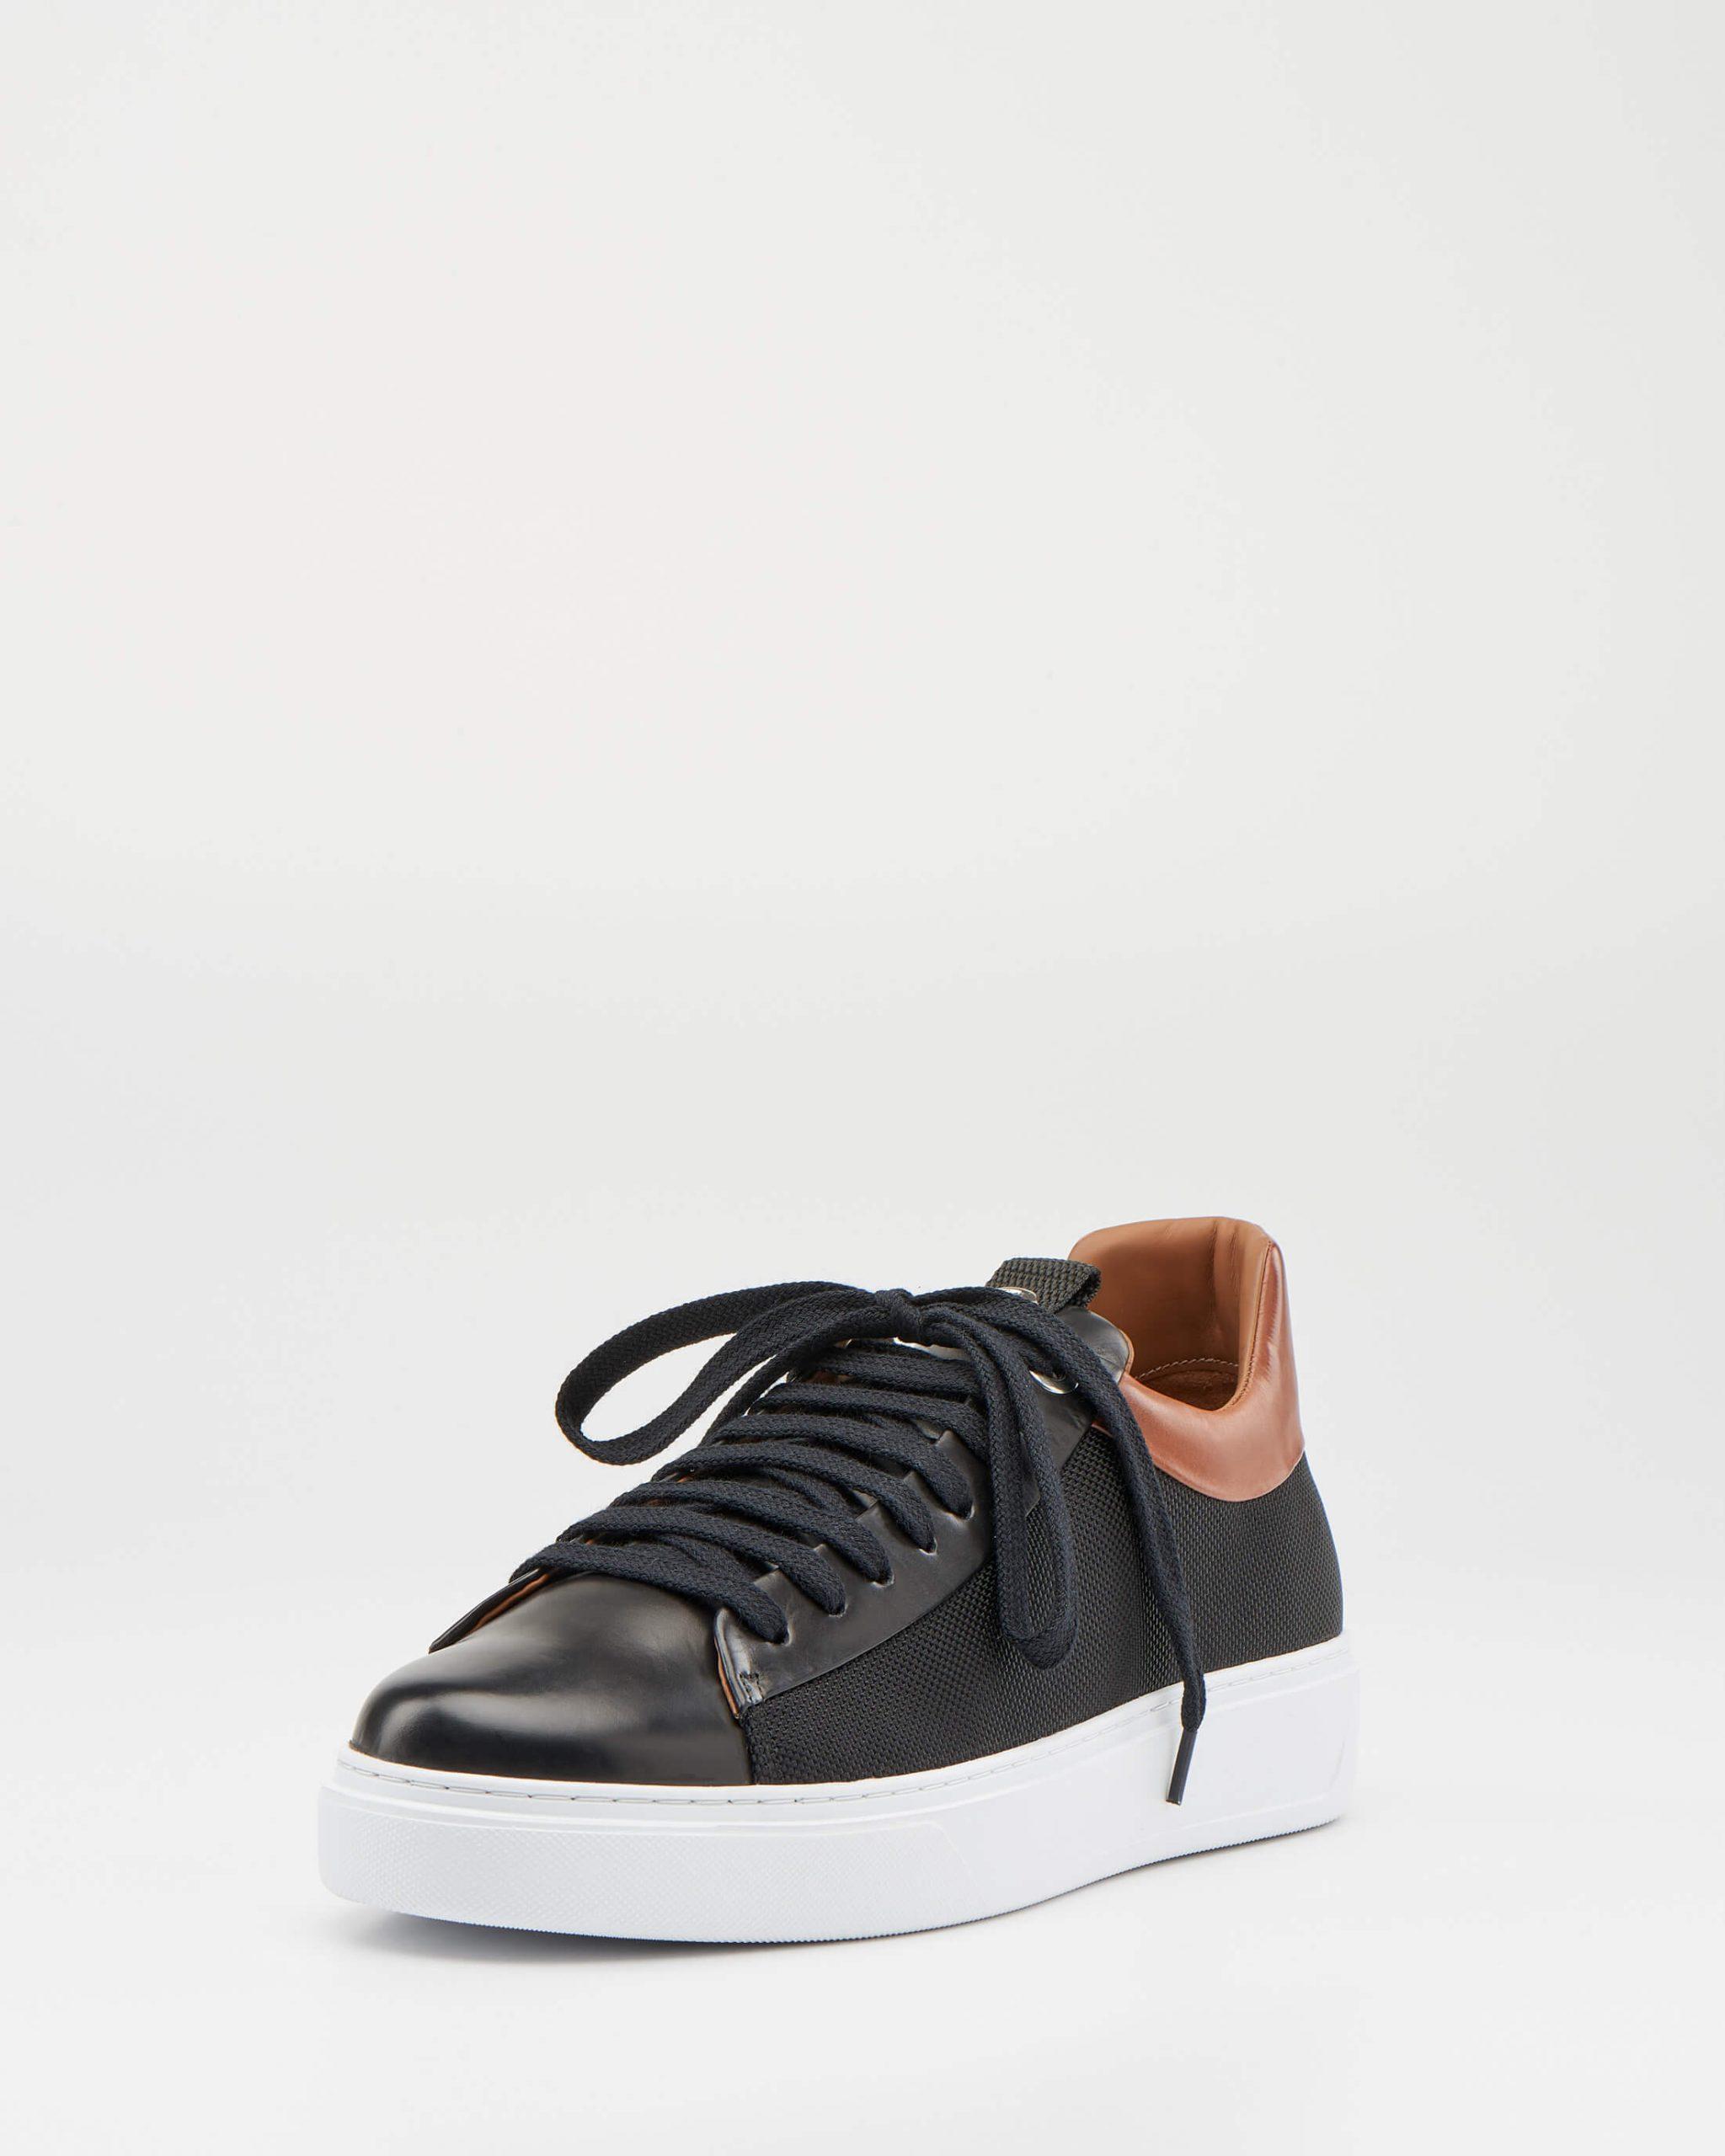 Luis Onofre Portuguese Shoes FW22 – H5194_02MAP – Barista Black-2